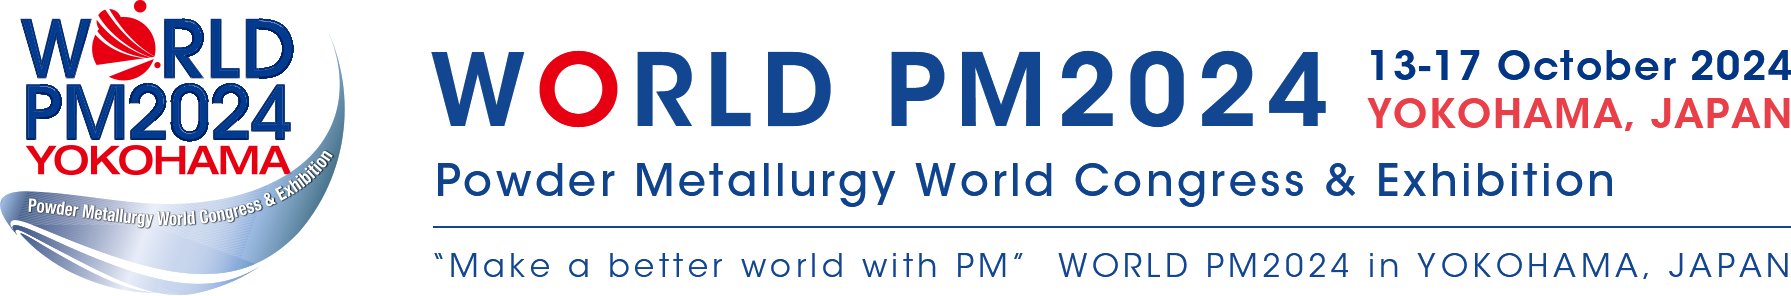 World PM2024